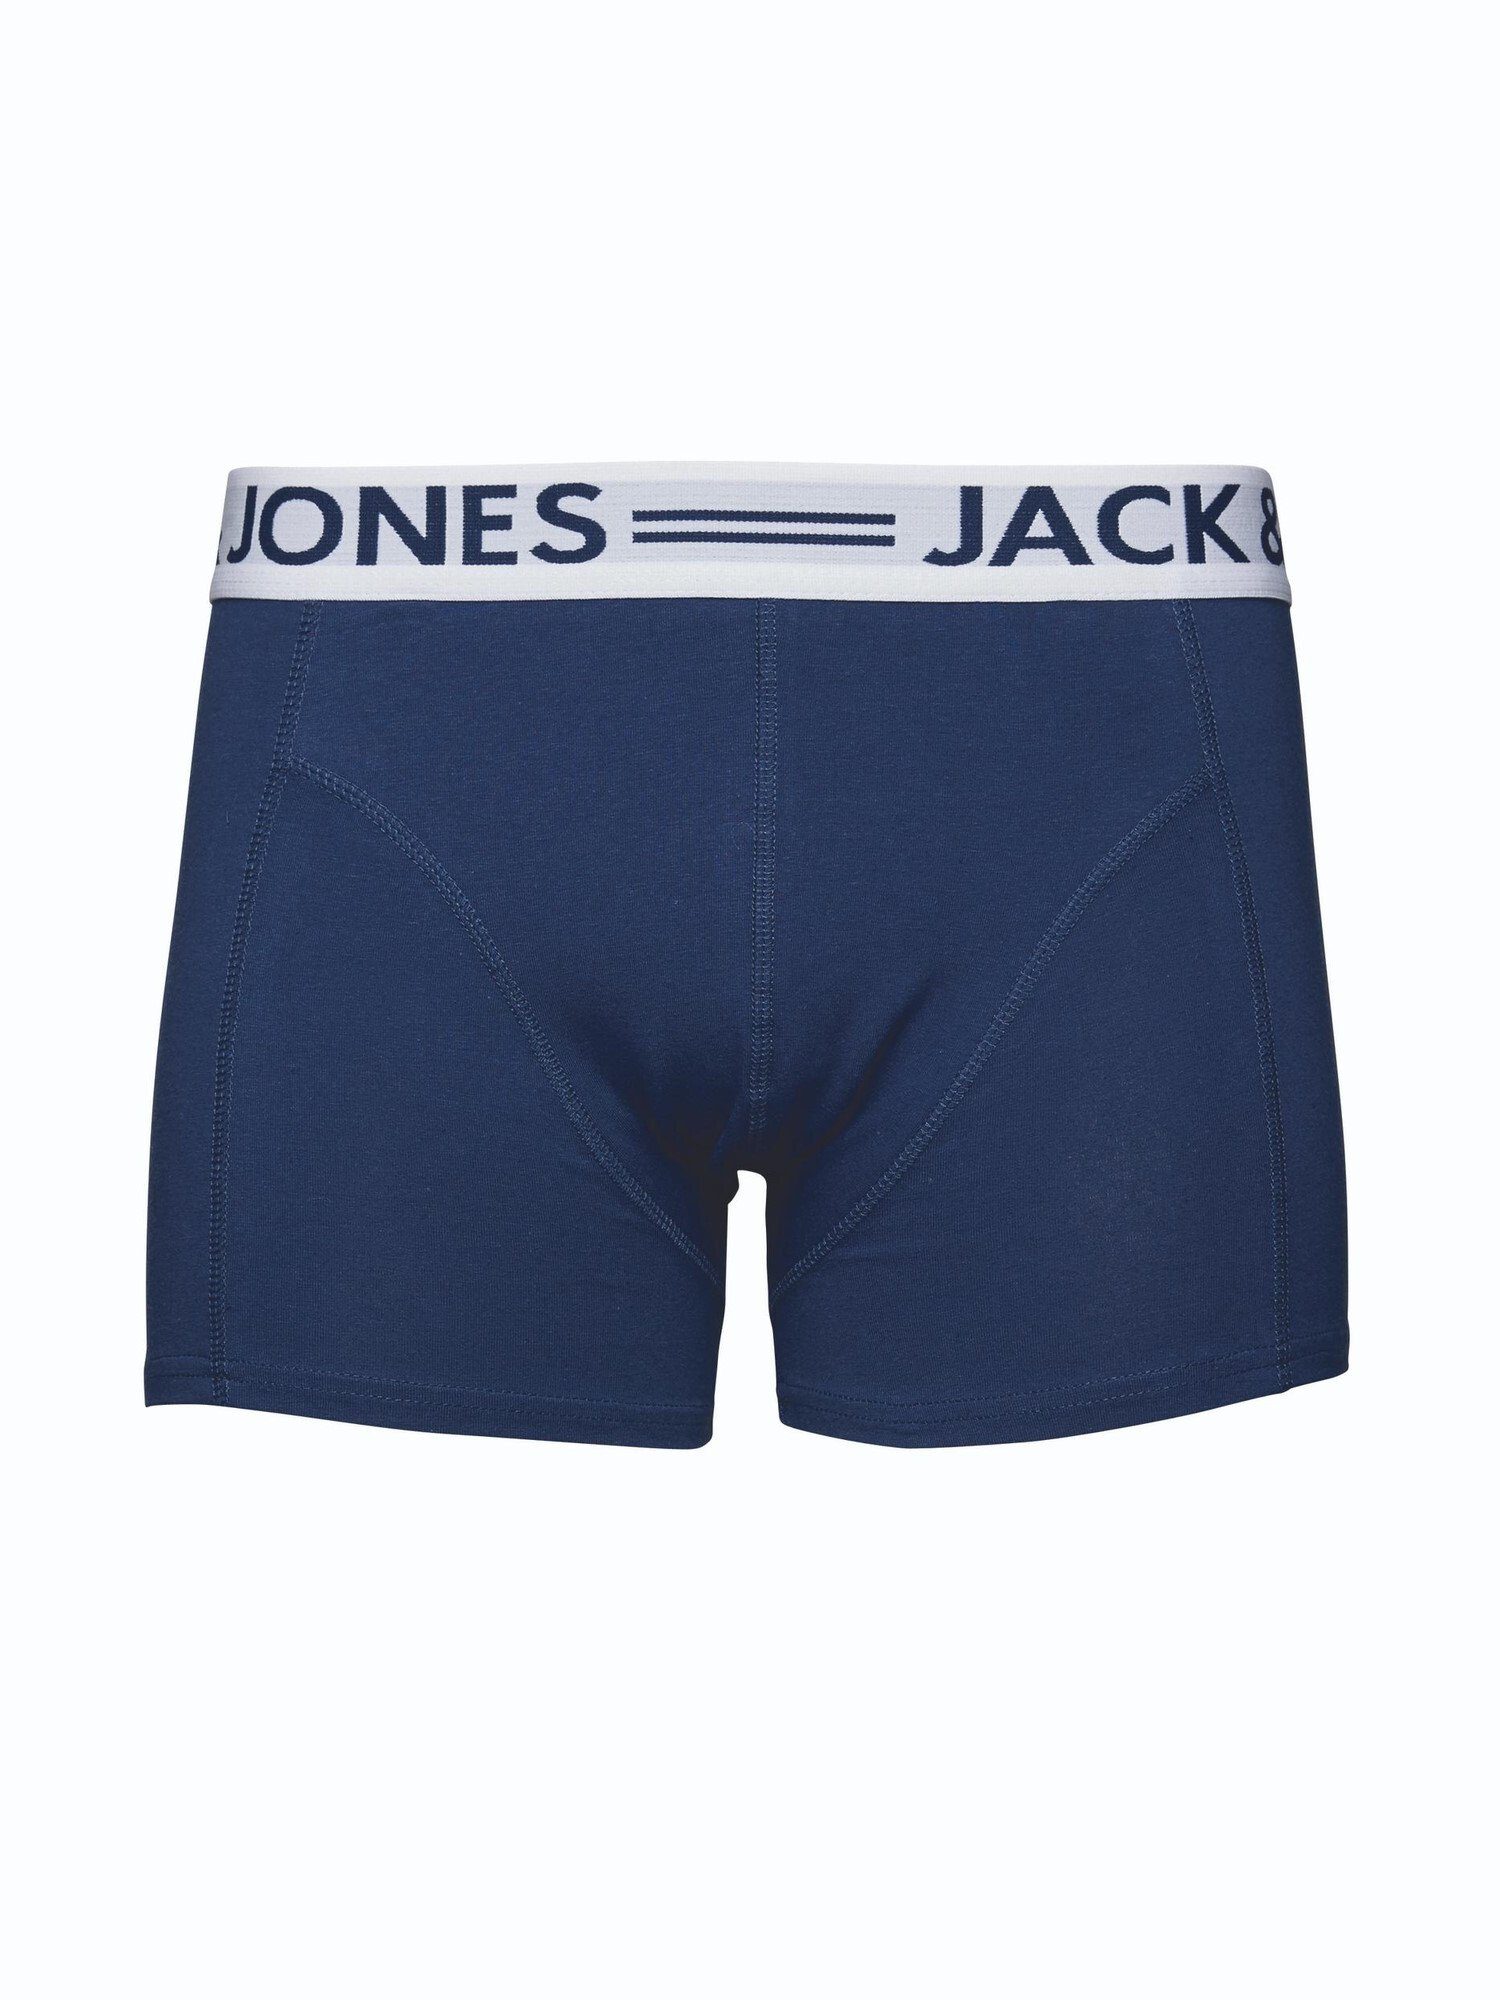 Jack & Jones Boxershorts Trunks Sense Unterhose blau